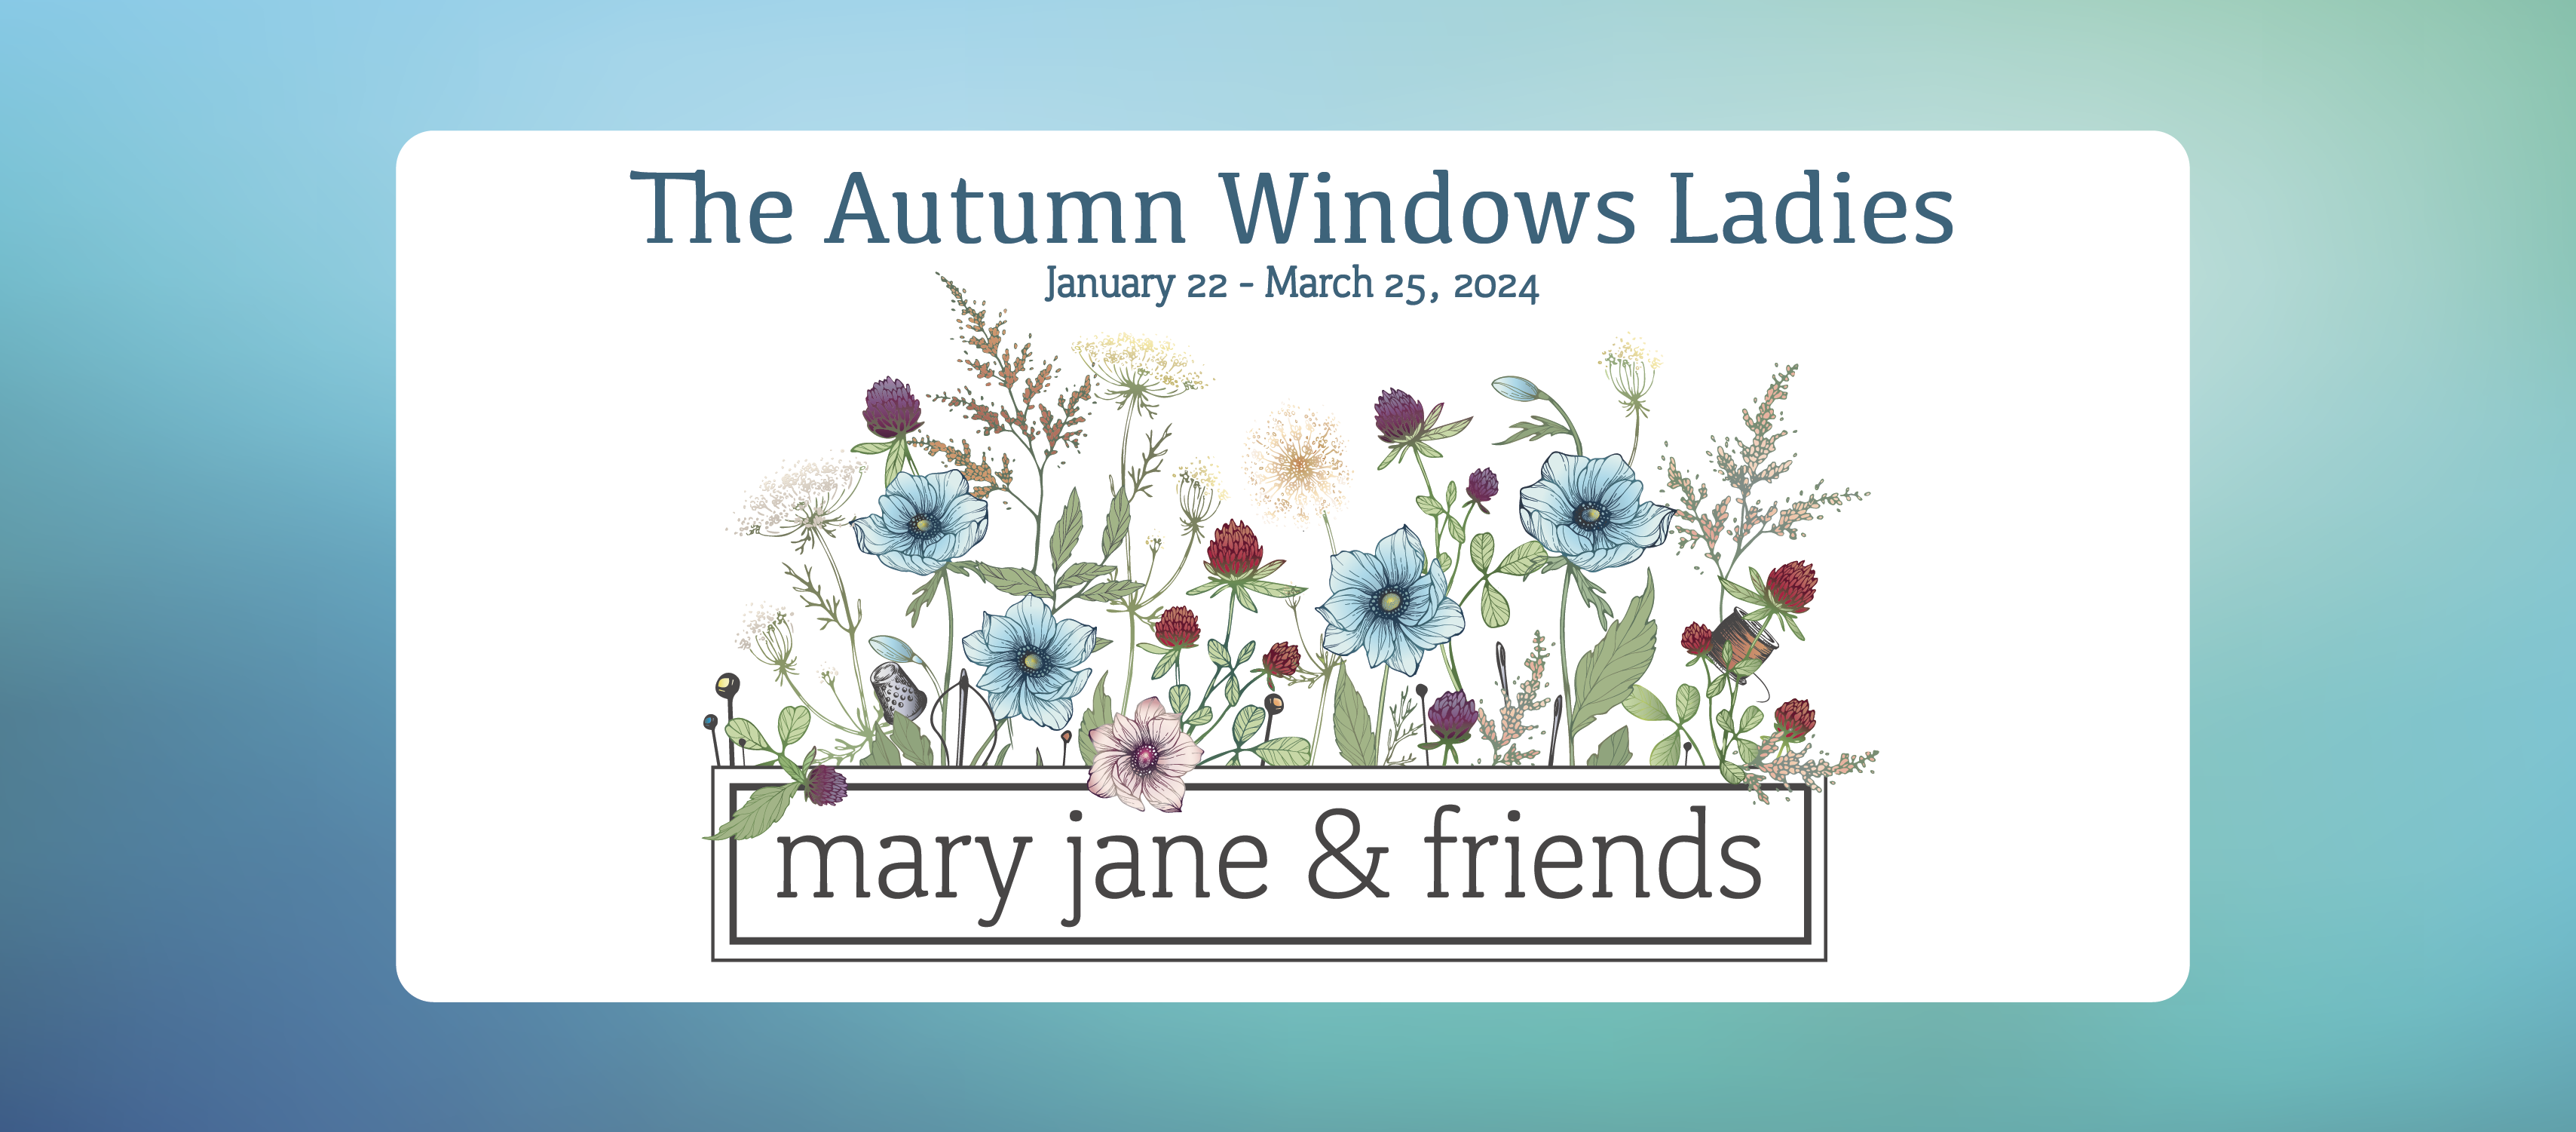 Mary Jane & Friends - The Autumn Windows Ladies